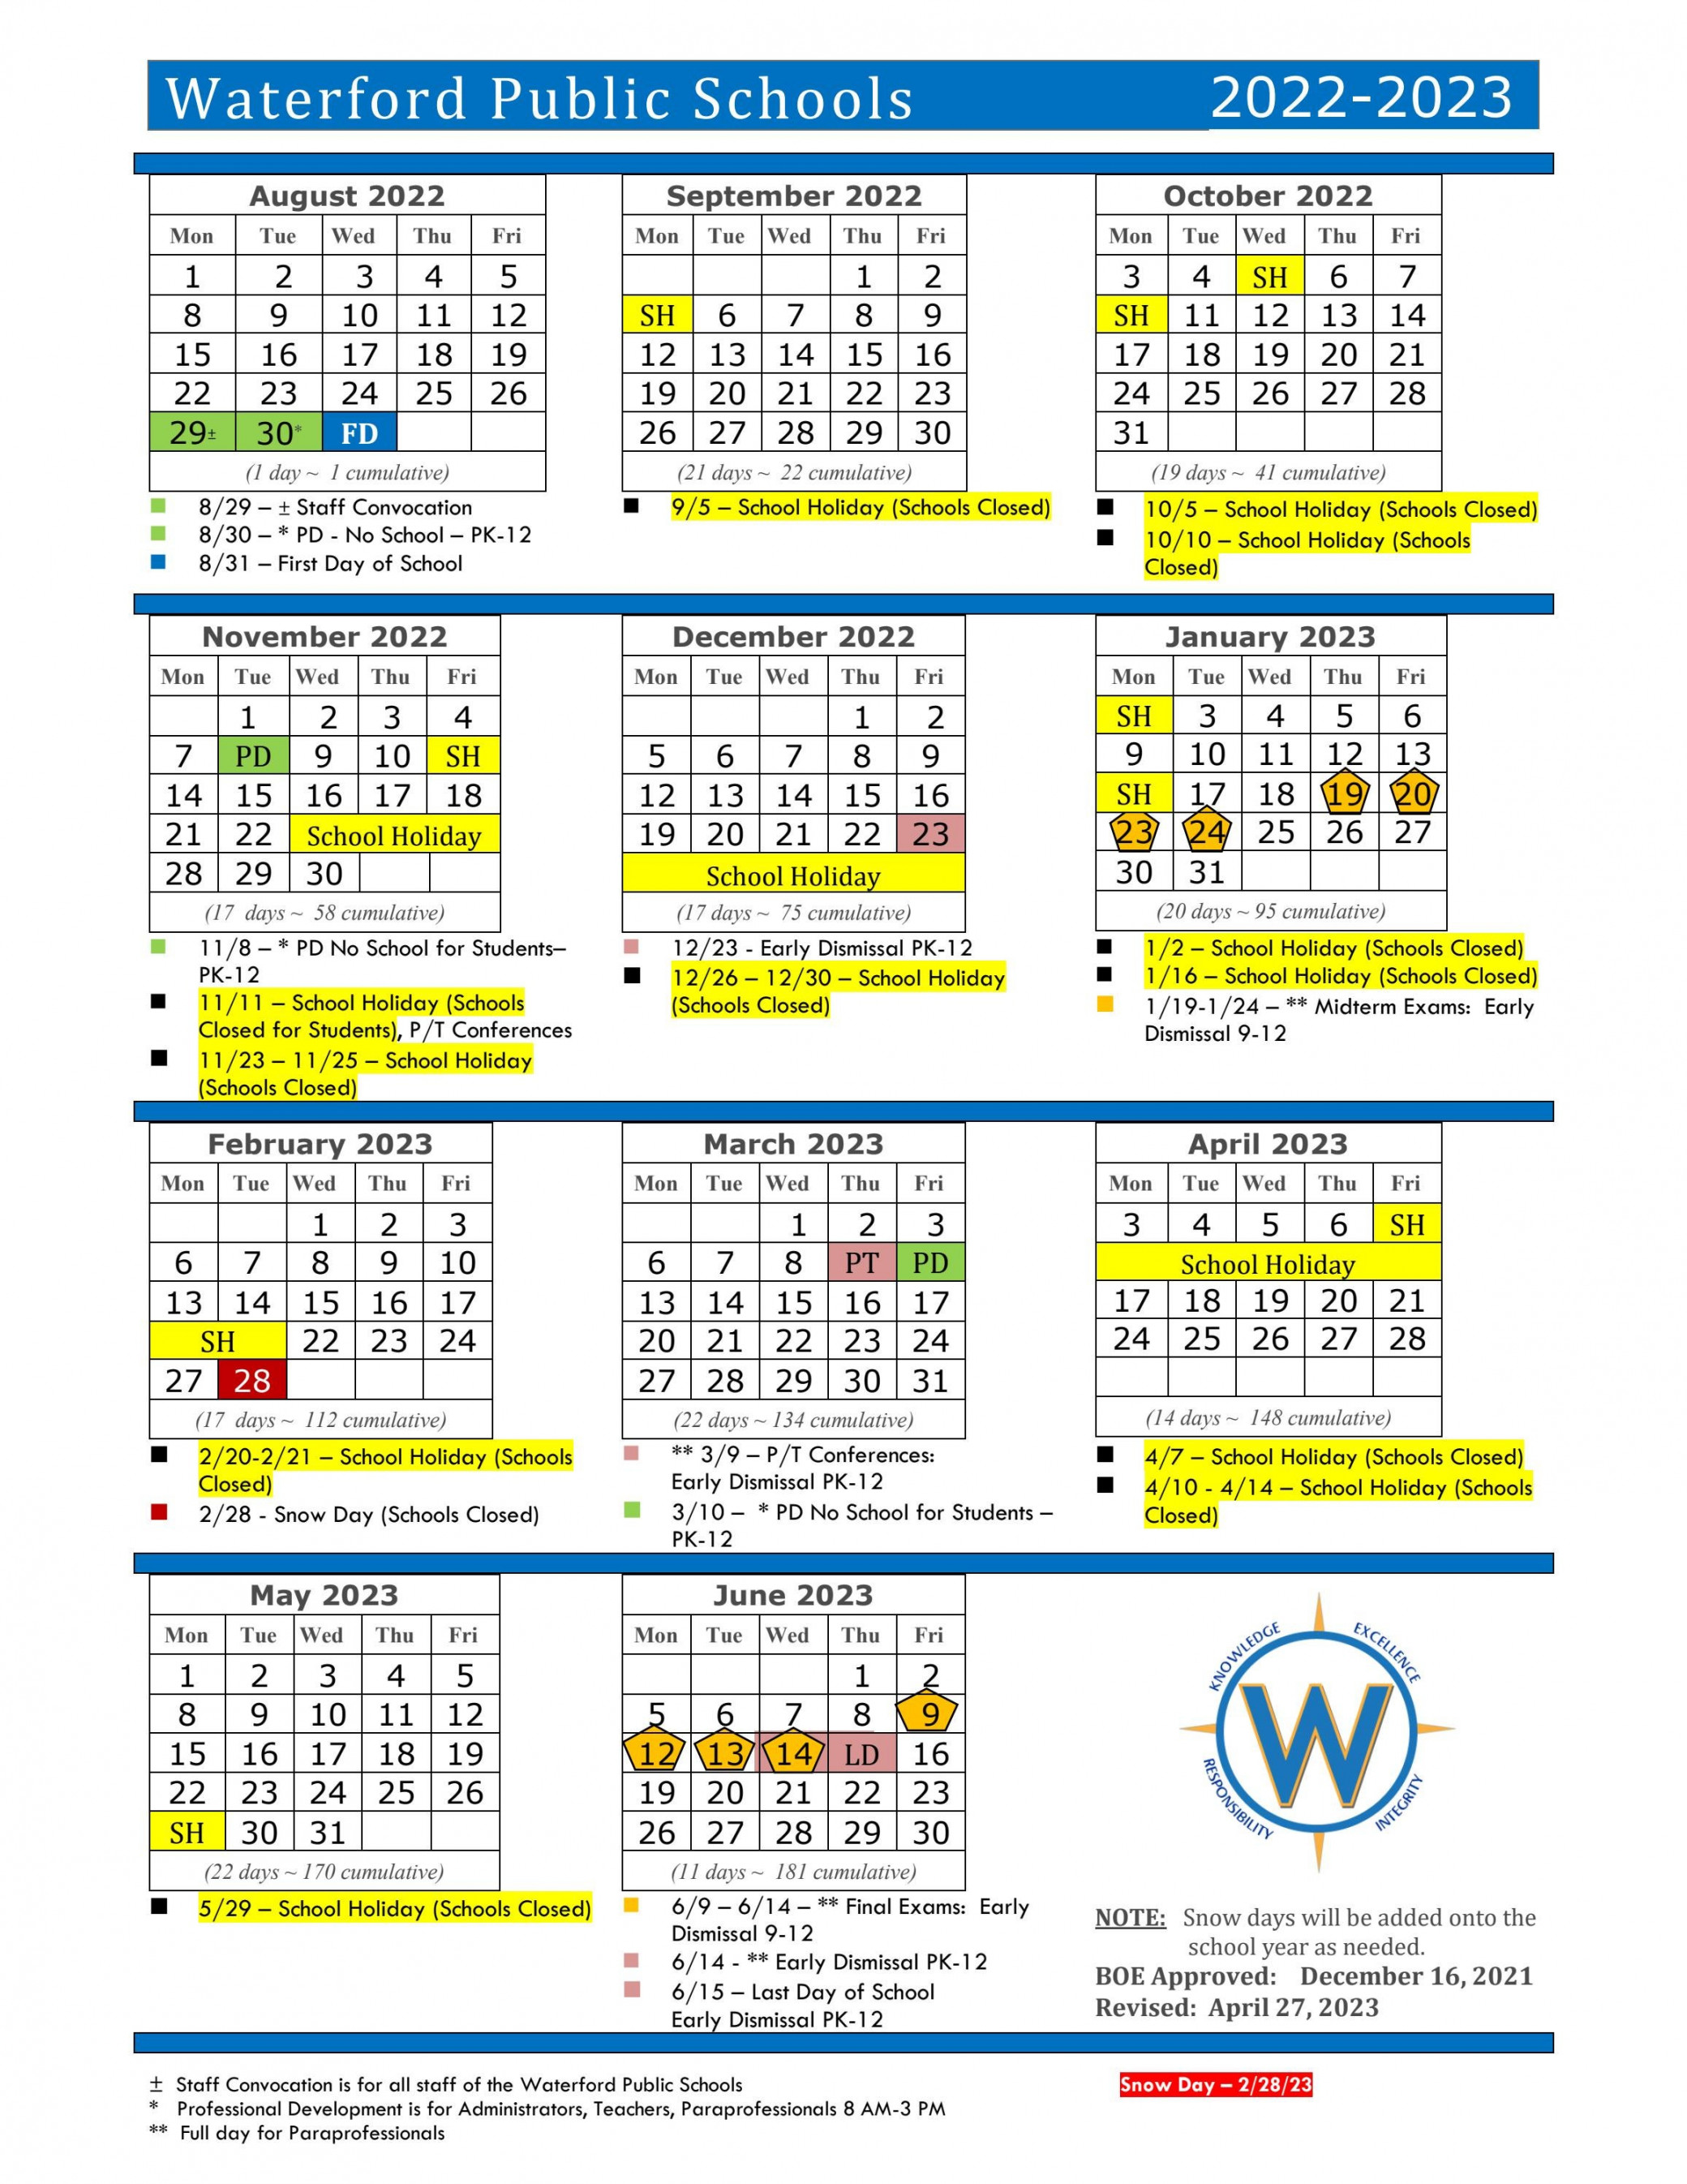 Waterford Public Schools Calendar - by Waterford Public